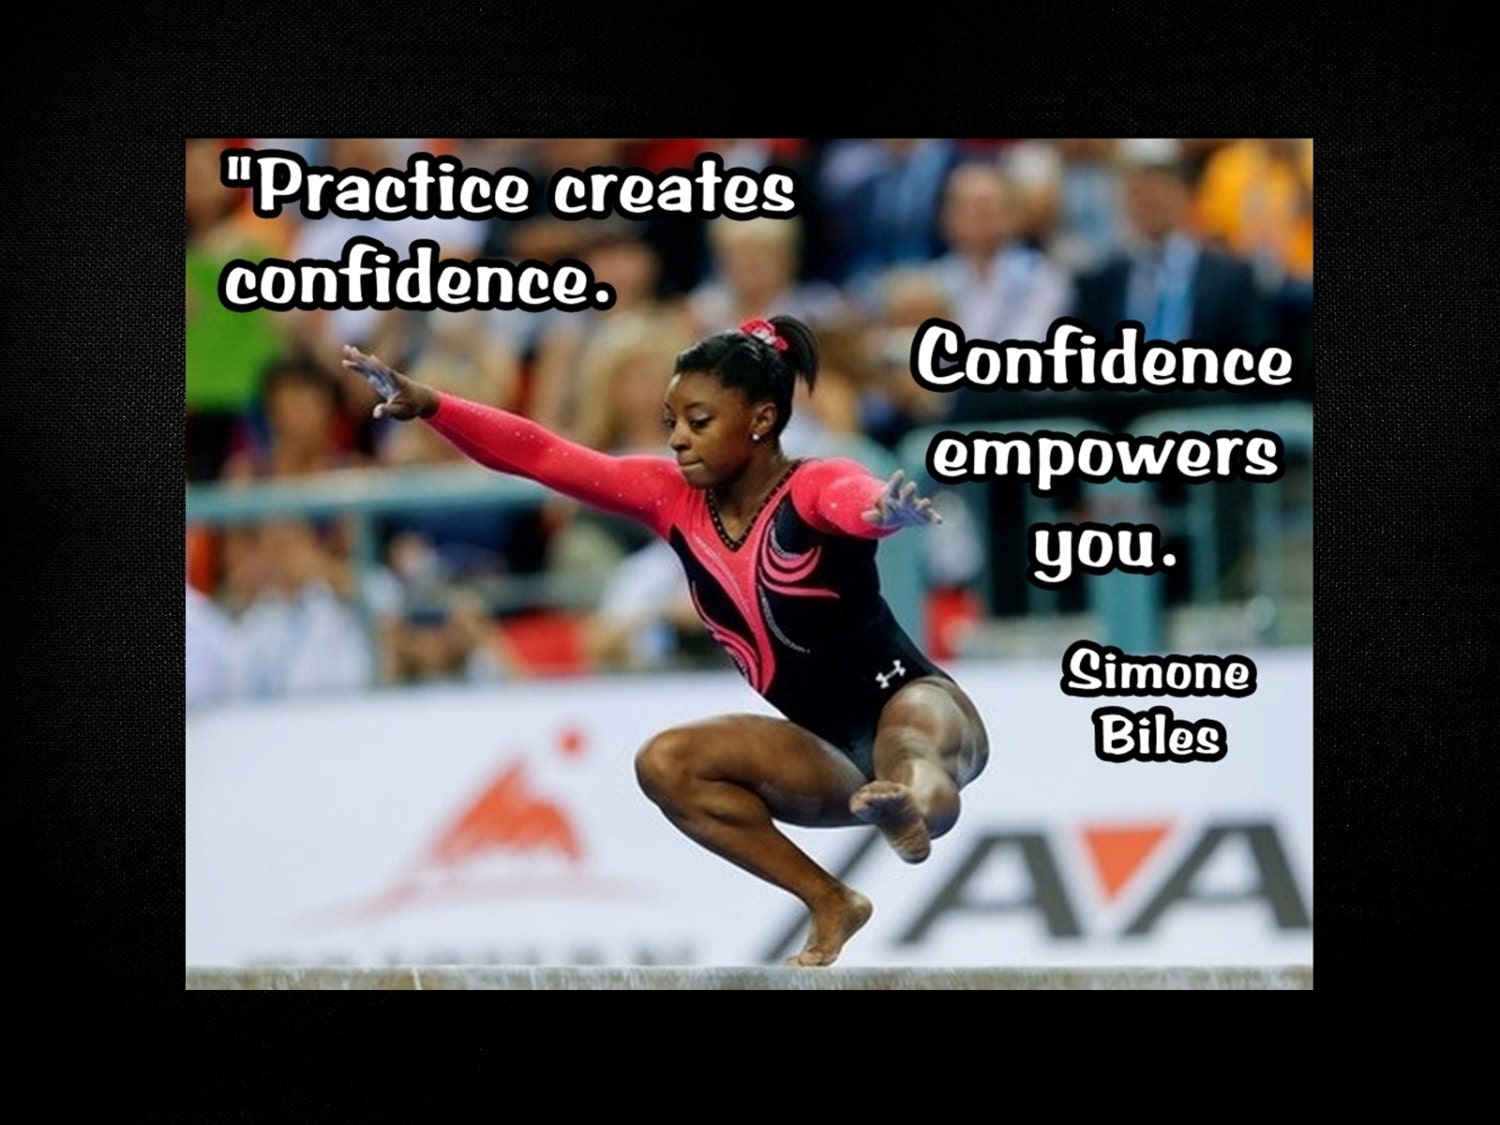 Gymnastics Motivation Poster Simone Biles Champion by ArleyArt